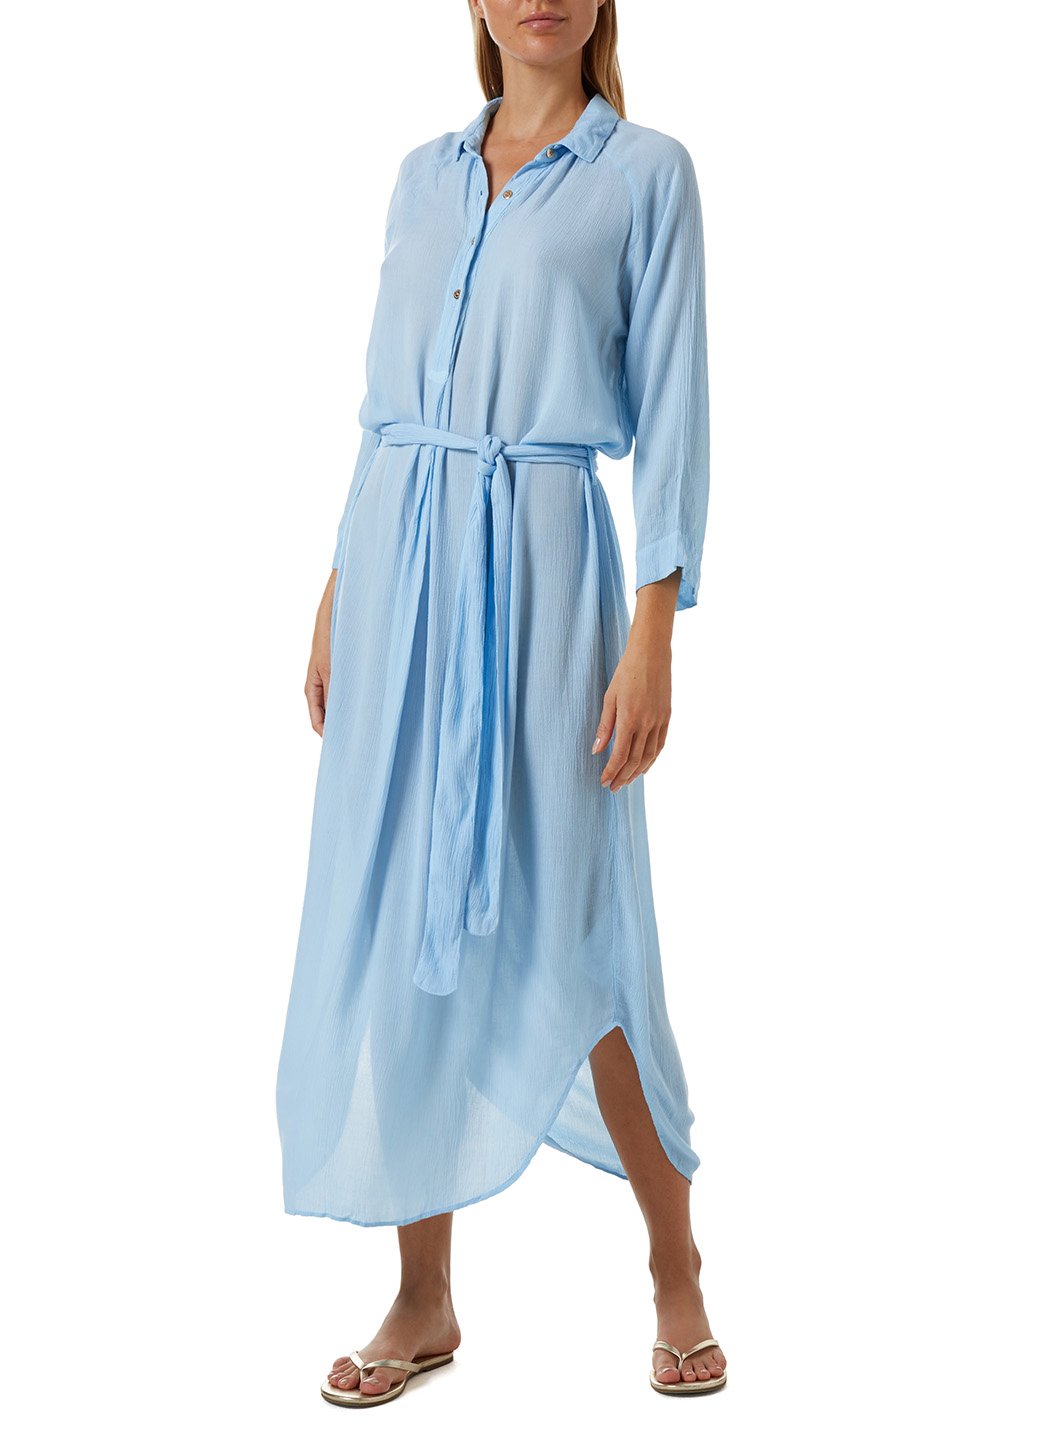 Alesha Cornflower Blue Dress